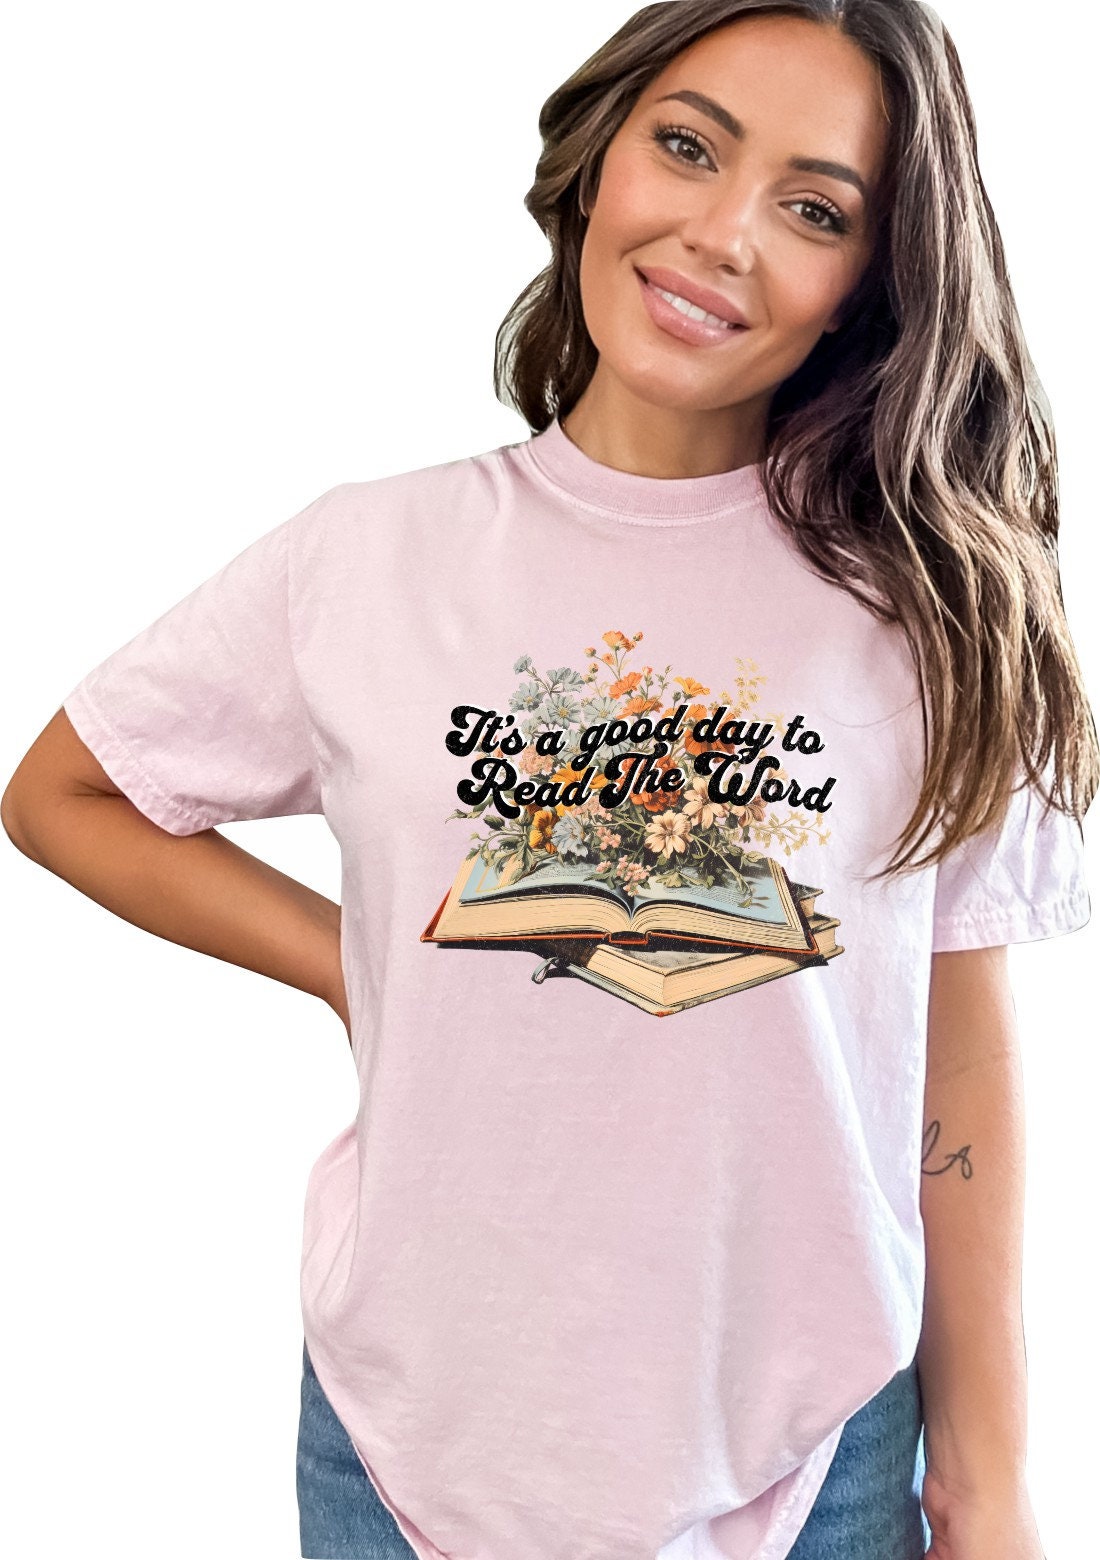 Christian Shirts Boho Christian Shirt Religious Tshirt Christian T Shirts Bible Verse Shirt It's a Good Day to Read the Word Shirt